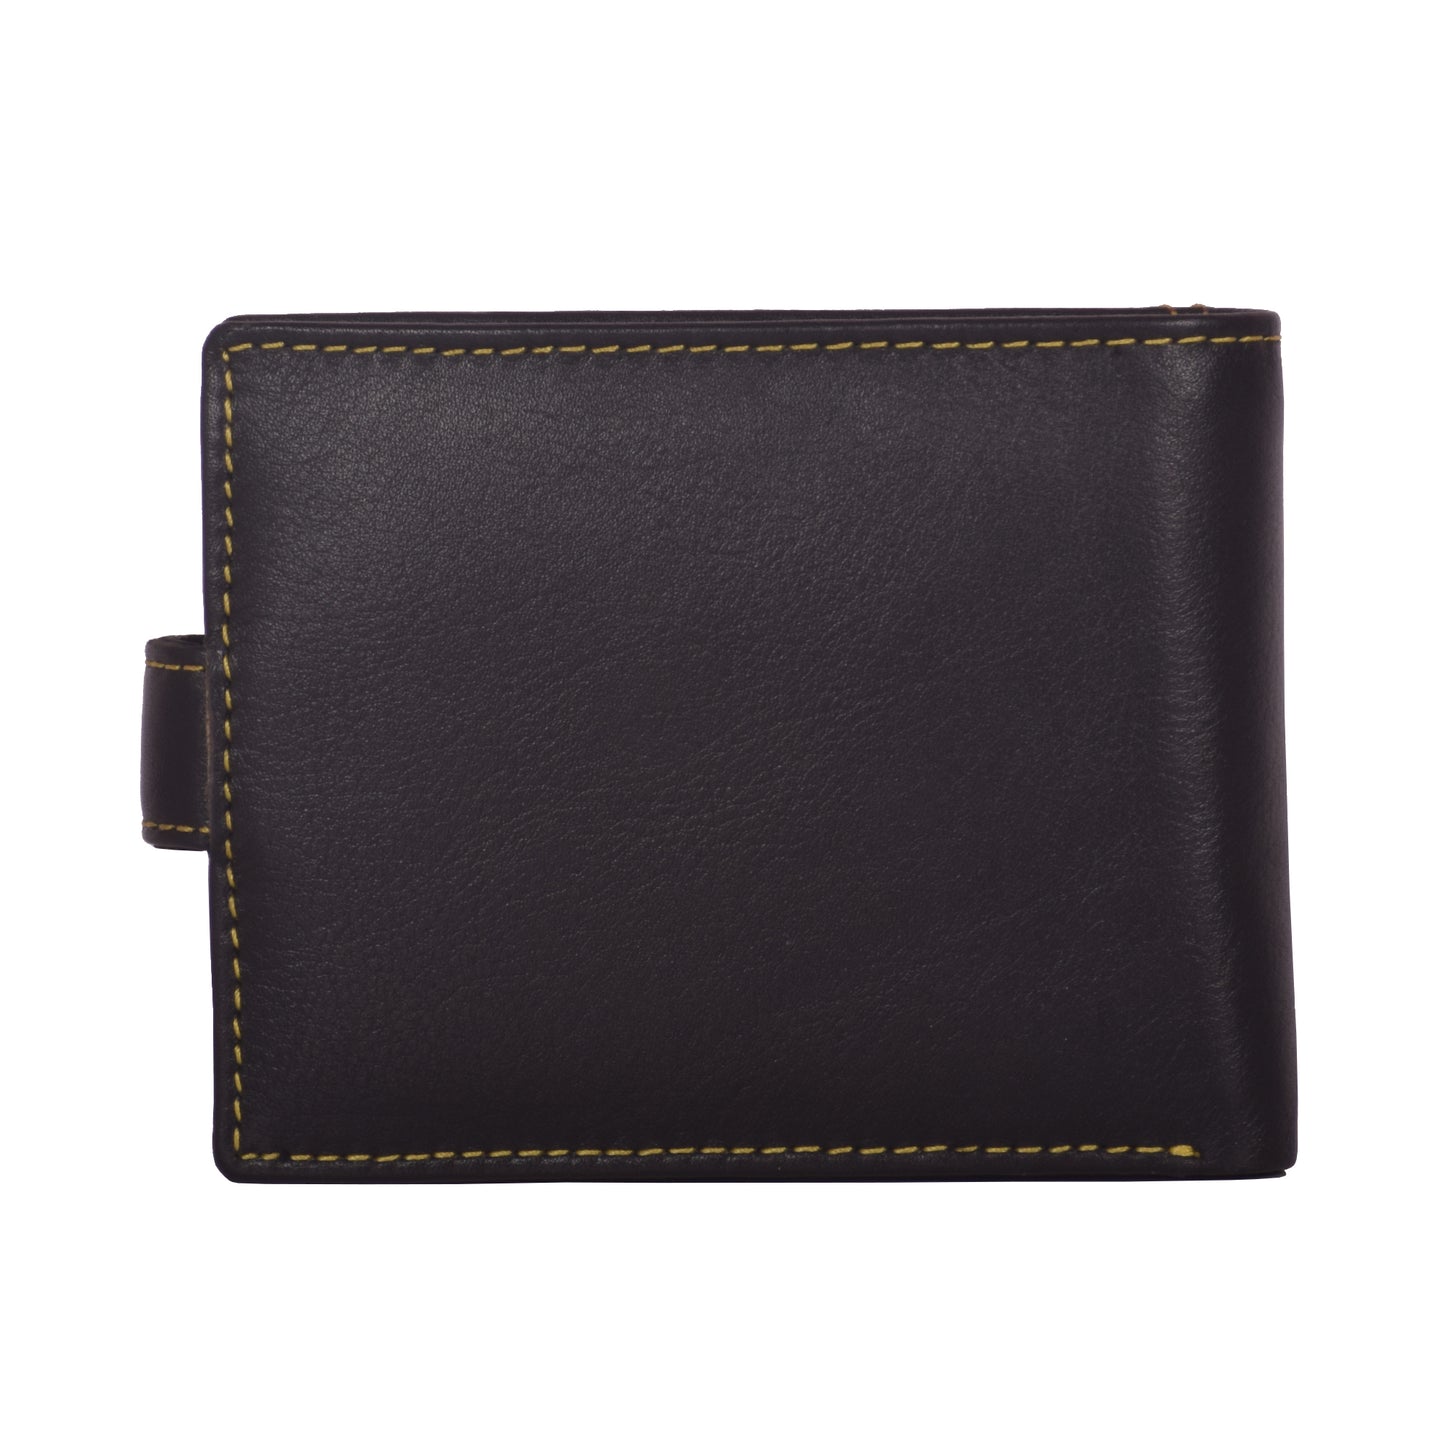 Premium Quality Leather Wallet for Men | RFID Wallet | Gift for Men